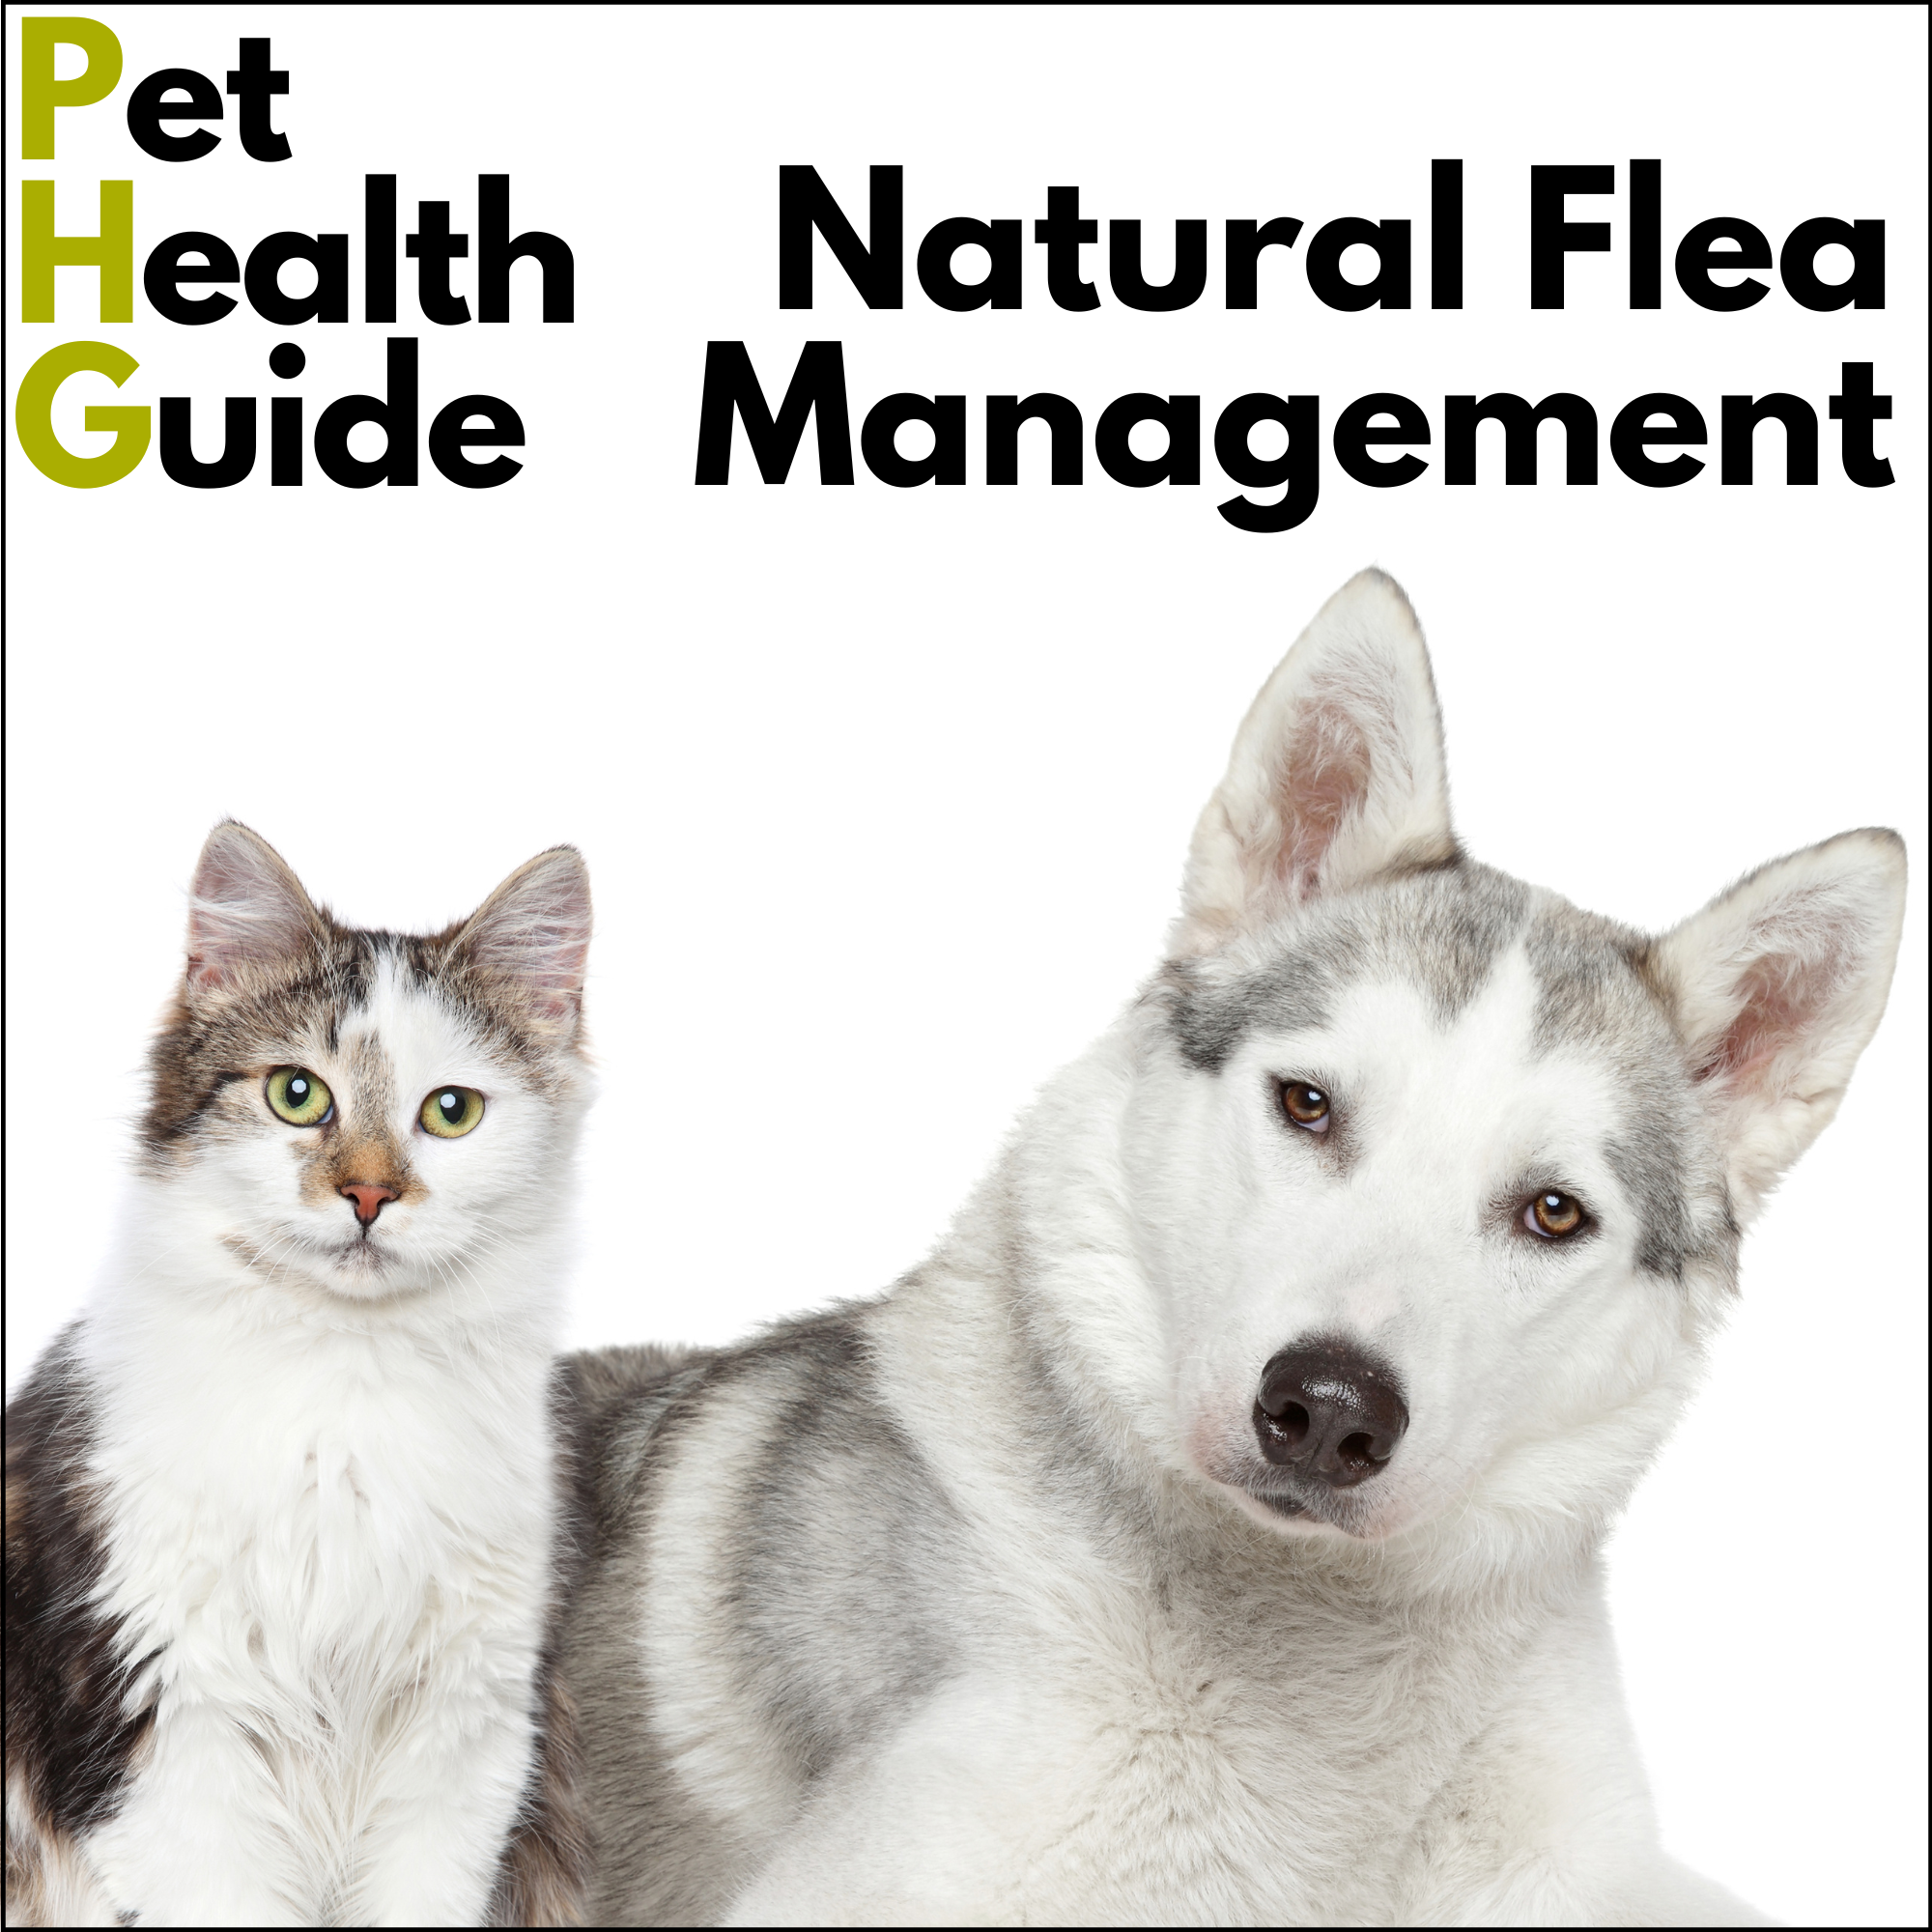 Natural Flea Management